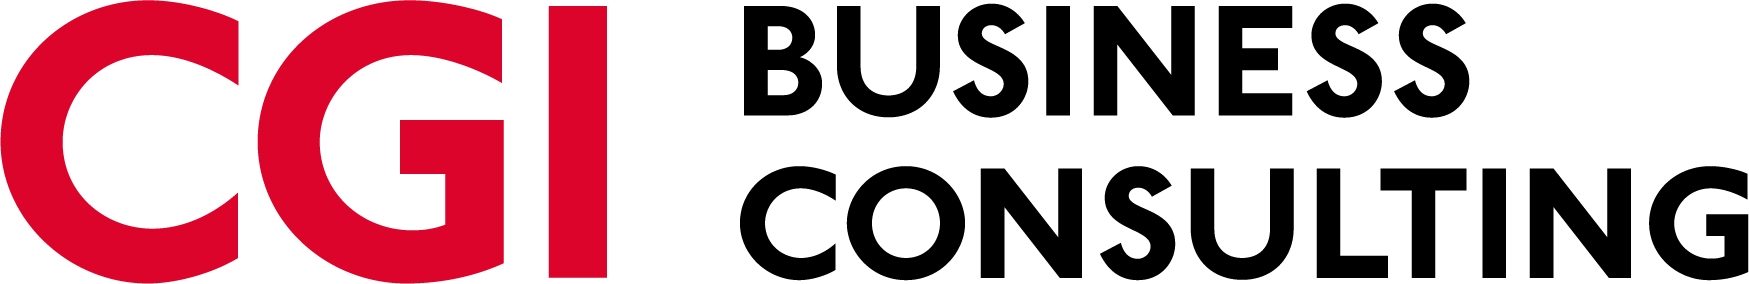 CGI Business Consulting logo